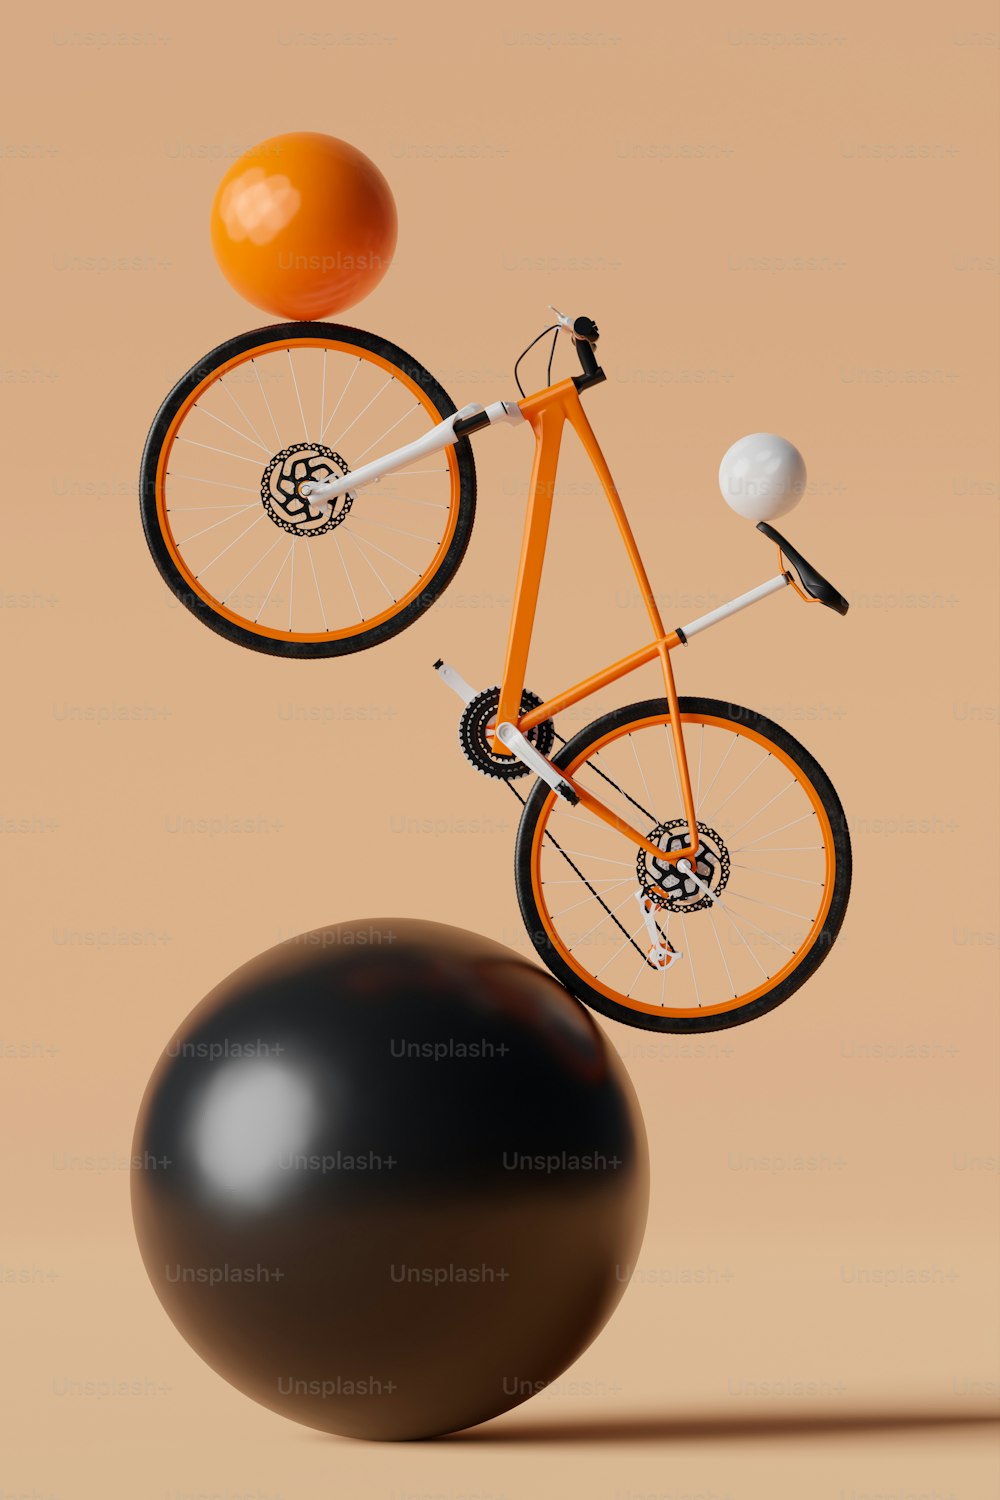 Una bicicleta naranja balanceándose sobre una bola negra